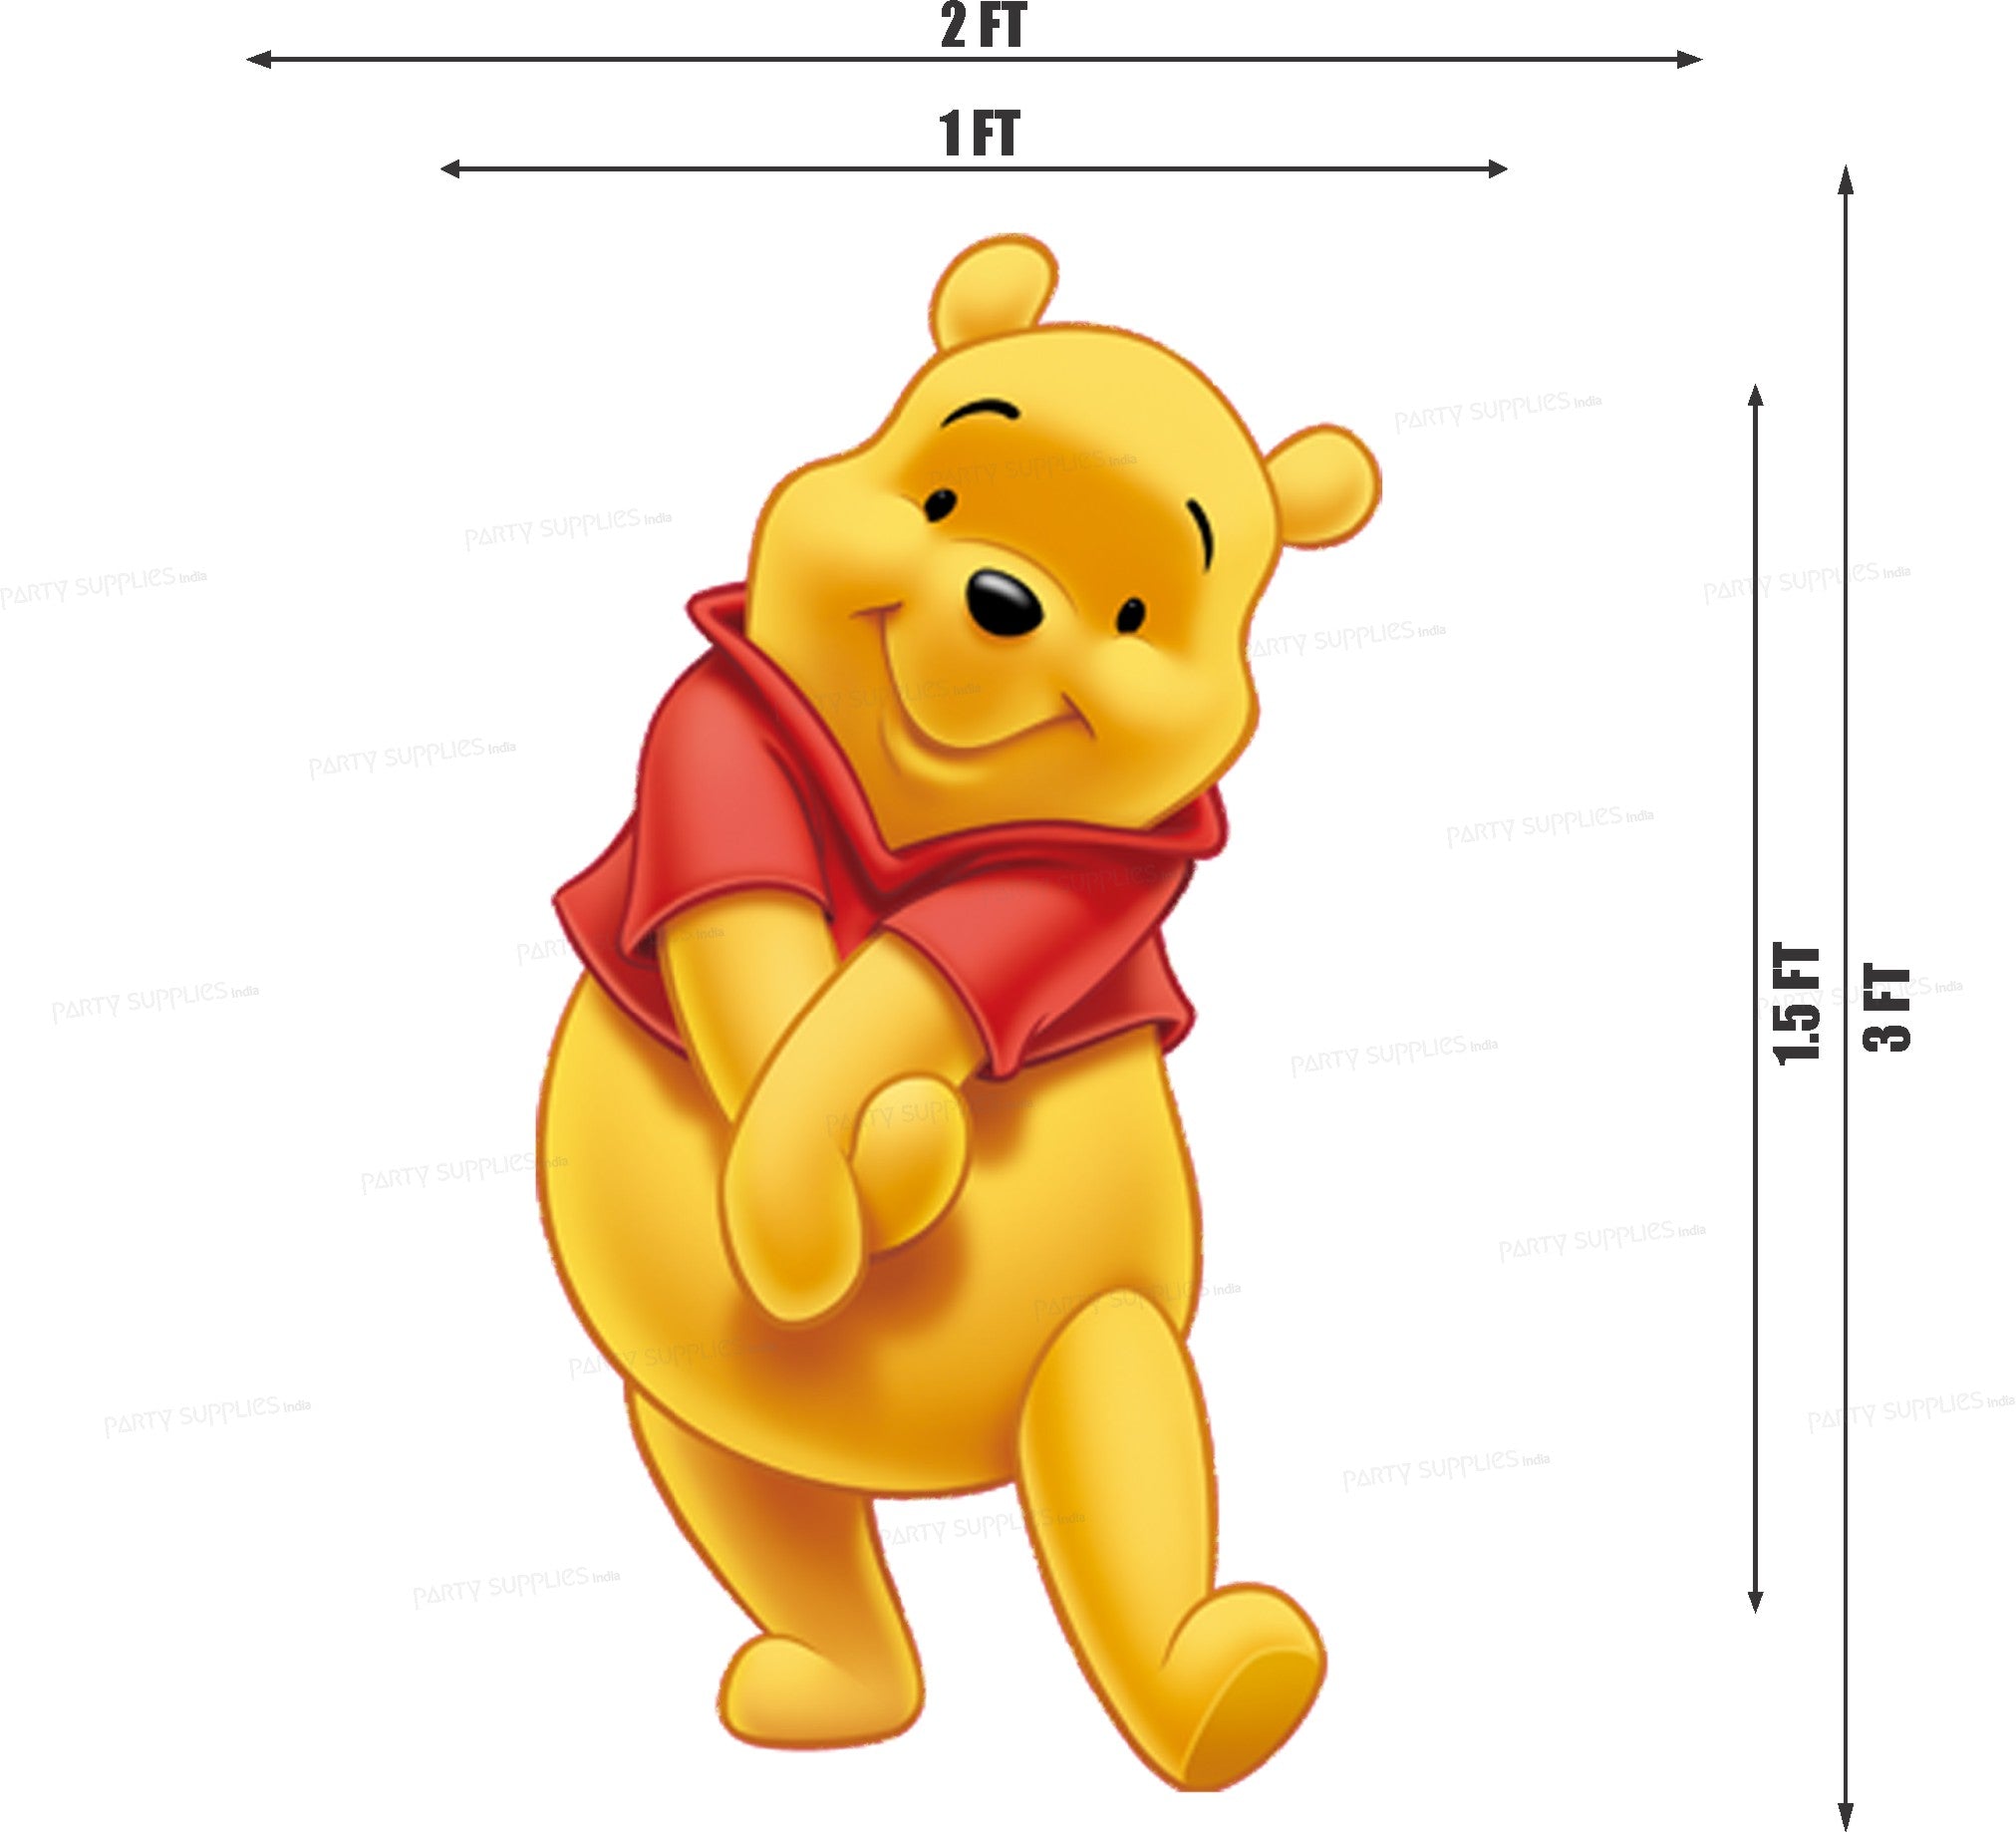 PSI Winnie the Pooh Theme Cutout - 10